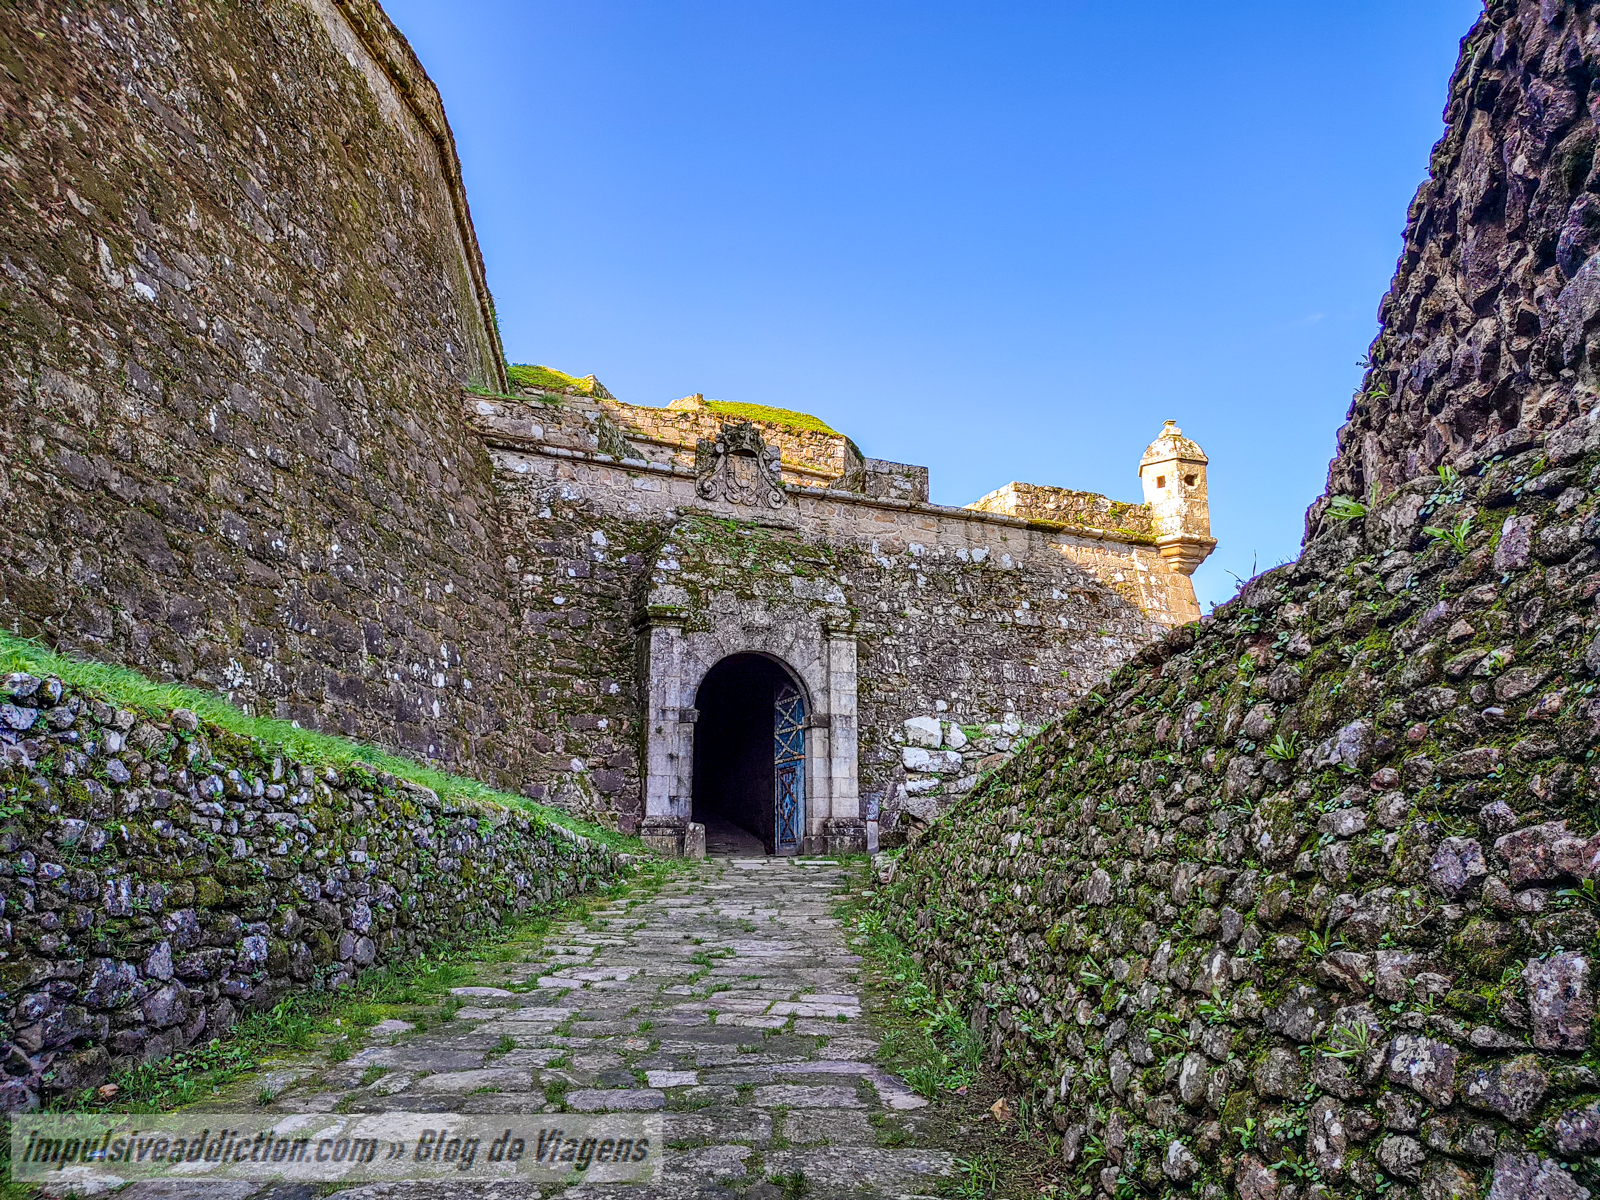 Gaviarra Gates in the Fortress of Valença